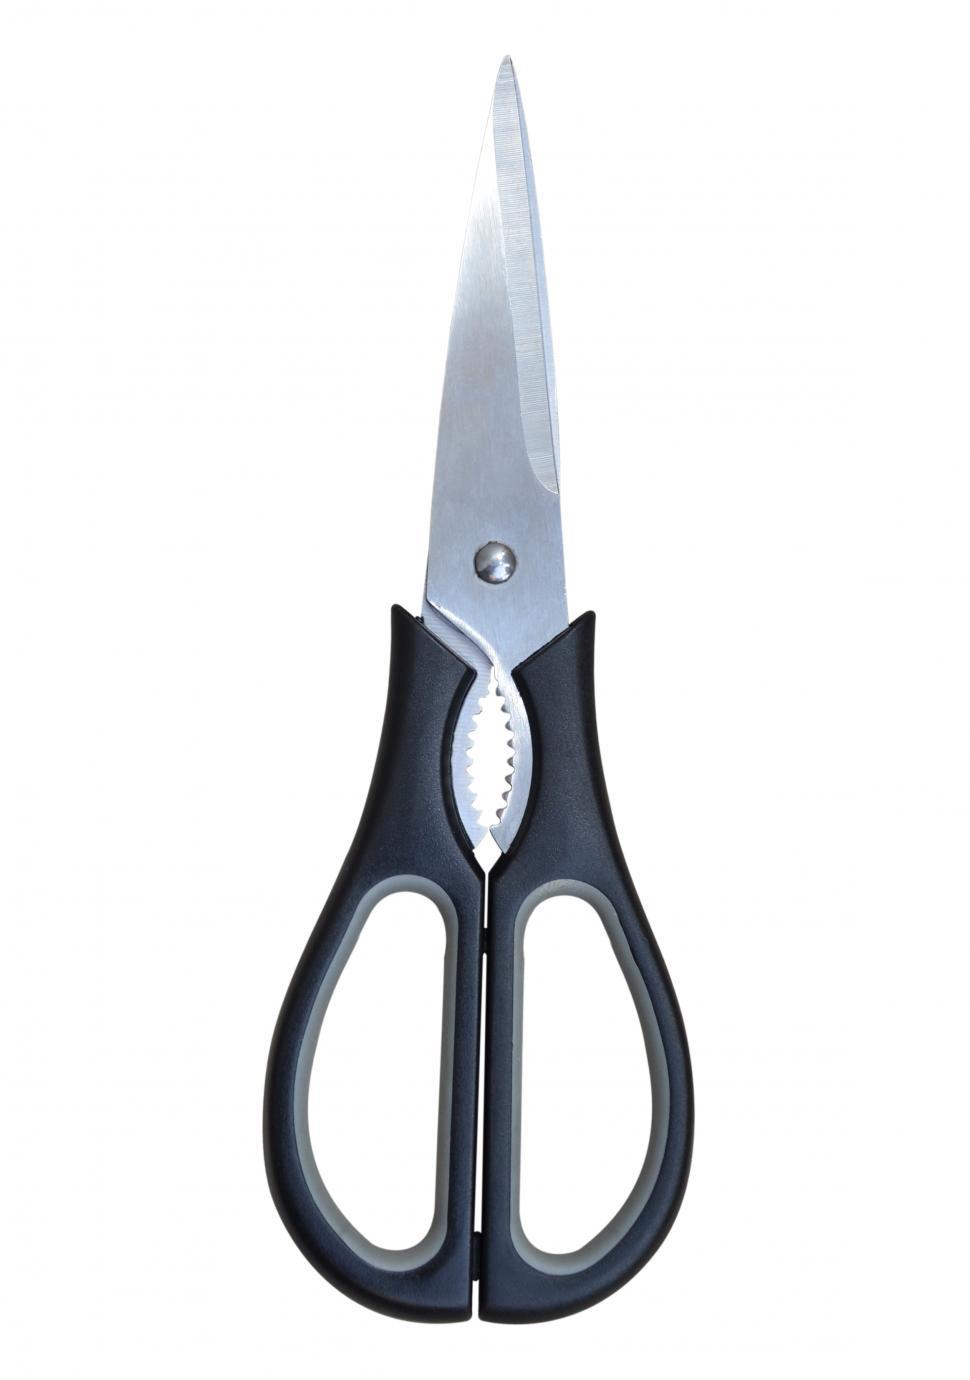 Download Free Stock Photo of Kitchen scissors  